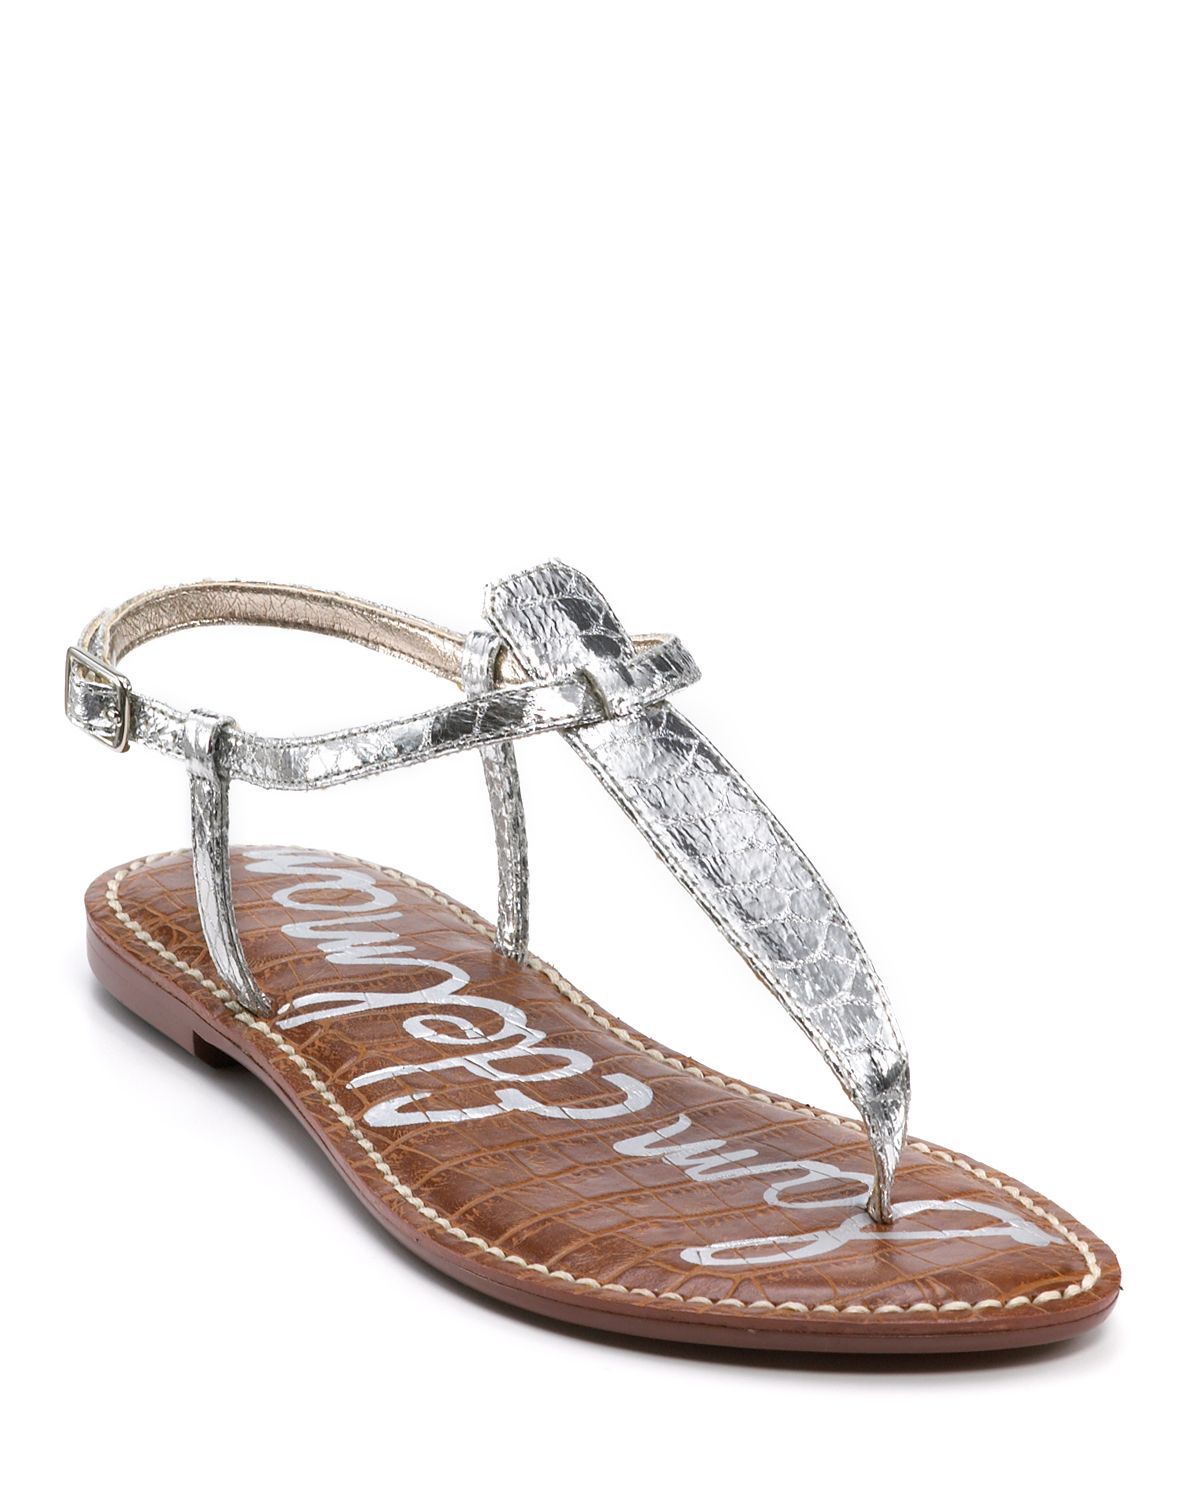 Sam Edelman Gigi Flat Sandals in Silver Snake (Metallic) - Lyst